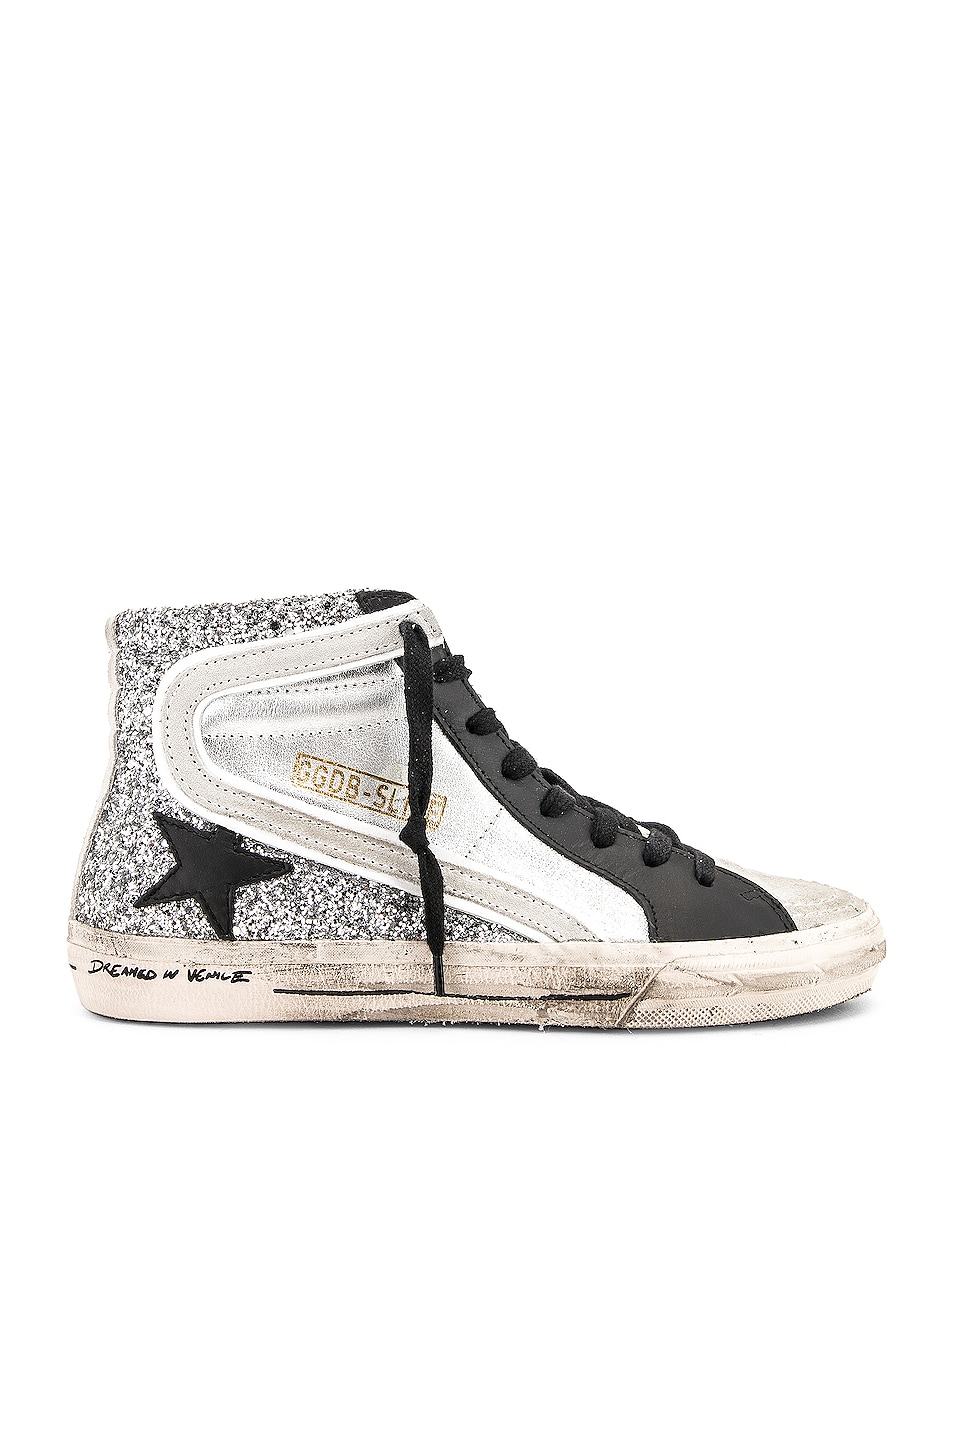 Image 1 of Golden Goose Slide Sneakers in Silver Glitter & Black Star